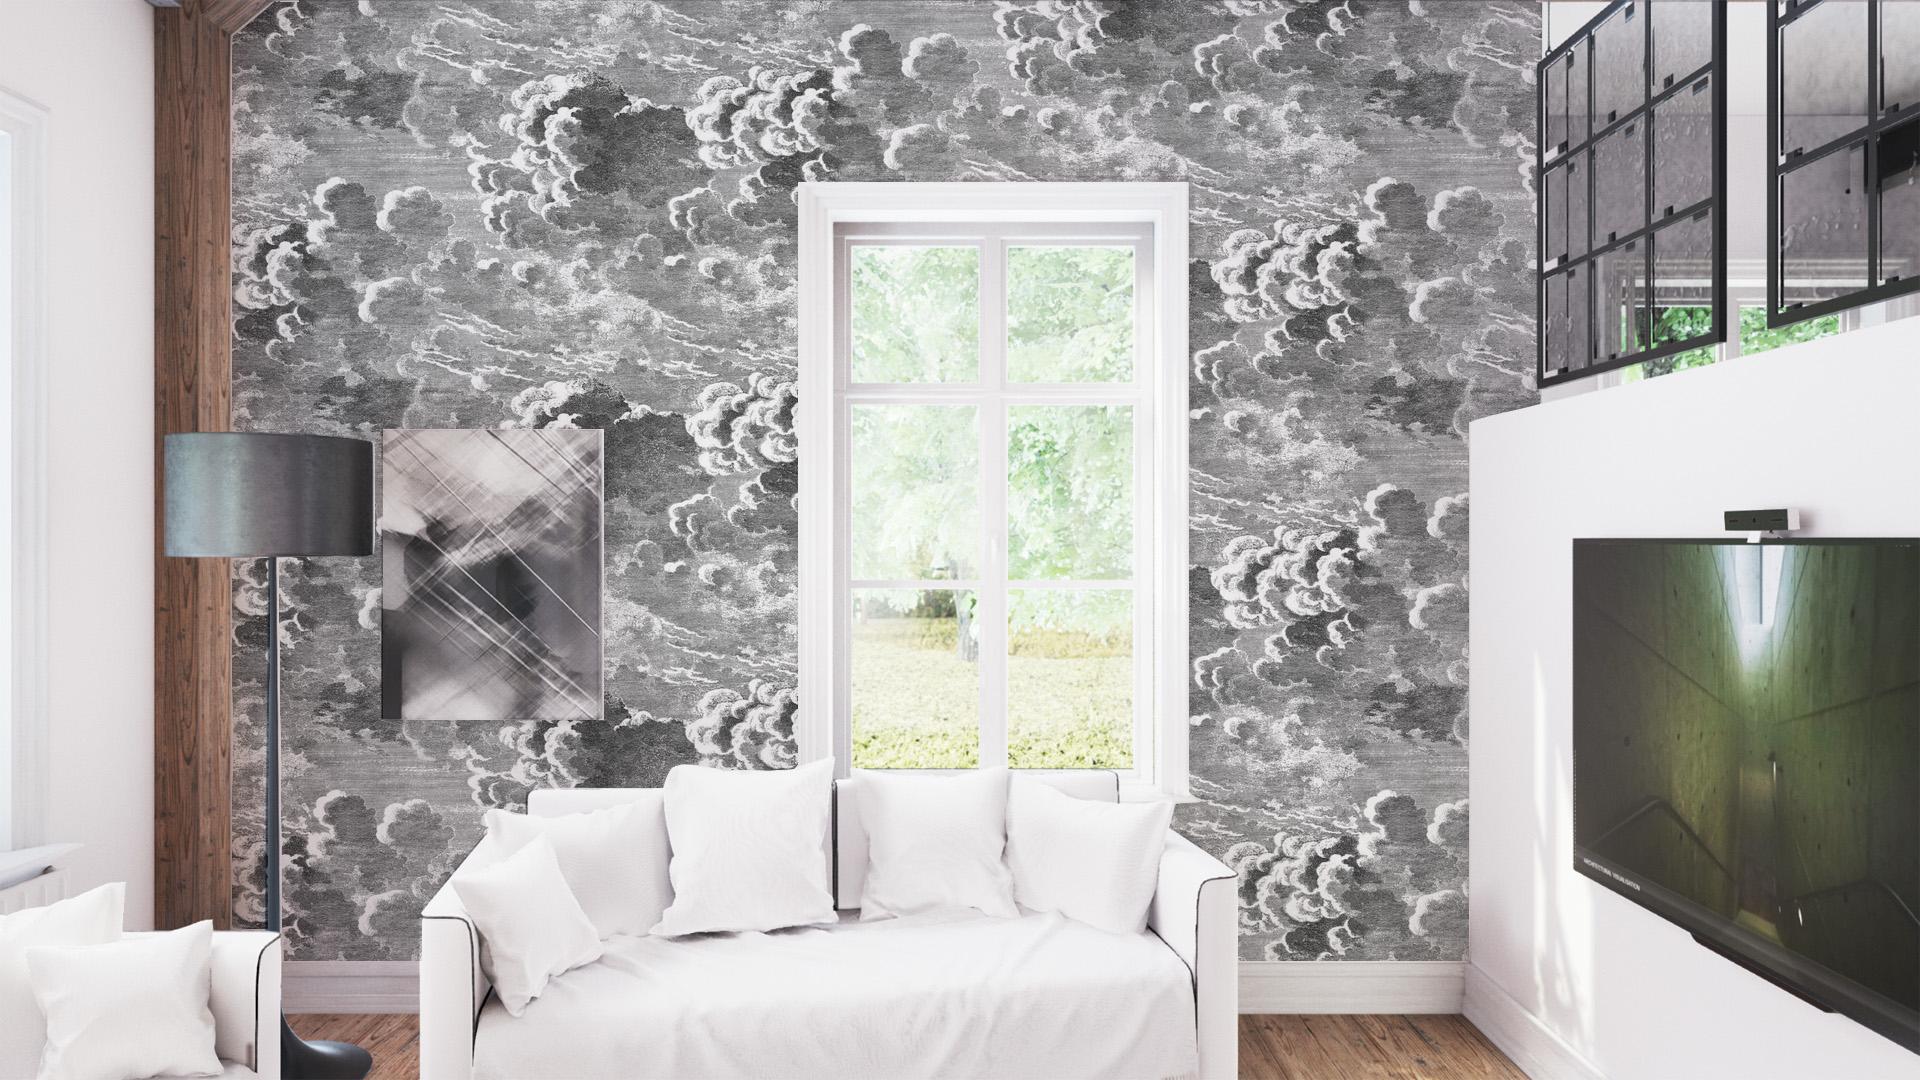 fornasetti cloud wallpaper,wallpaper,wall,room,green,interior design